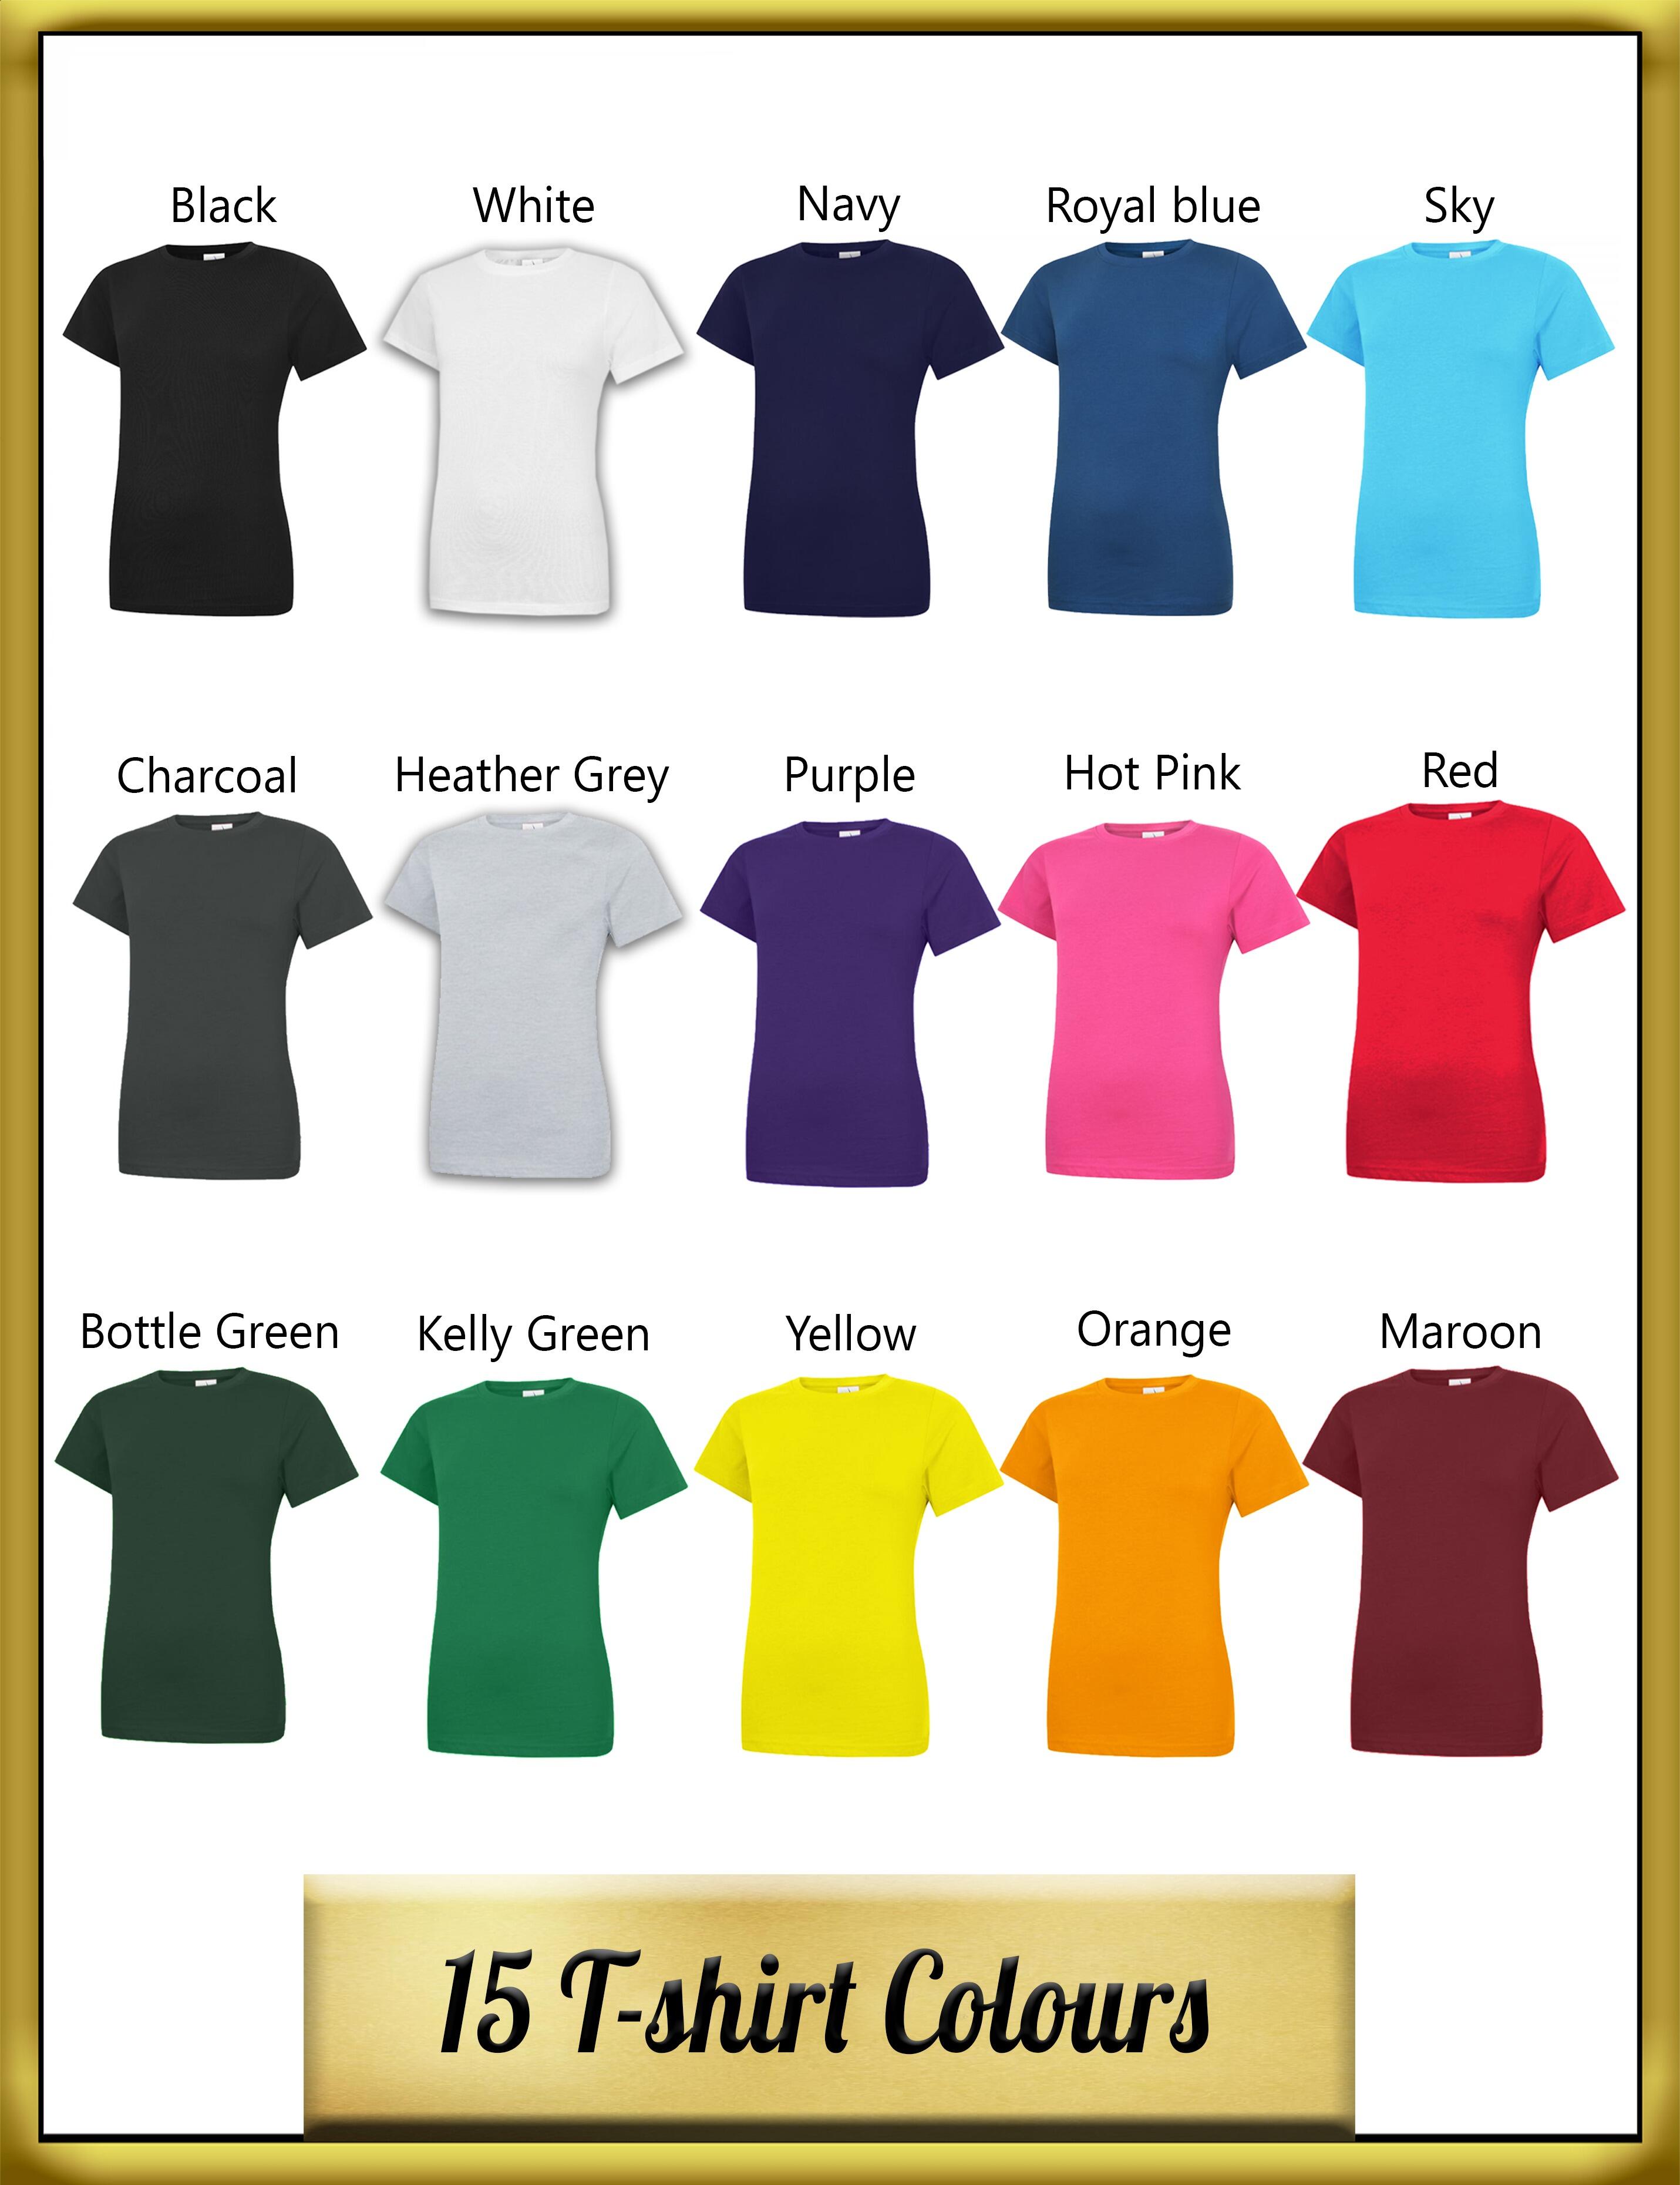 Golf photo printed women's t-shirt colours